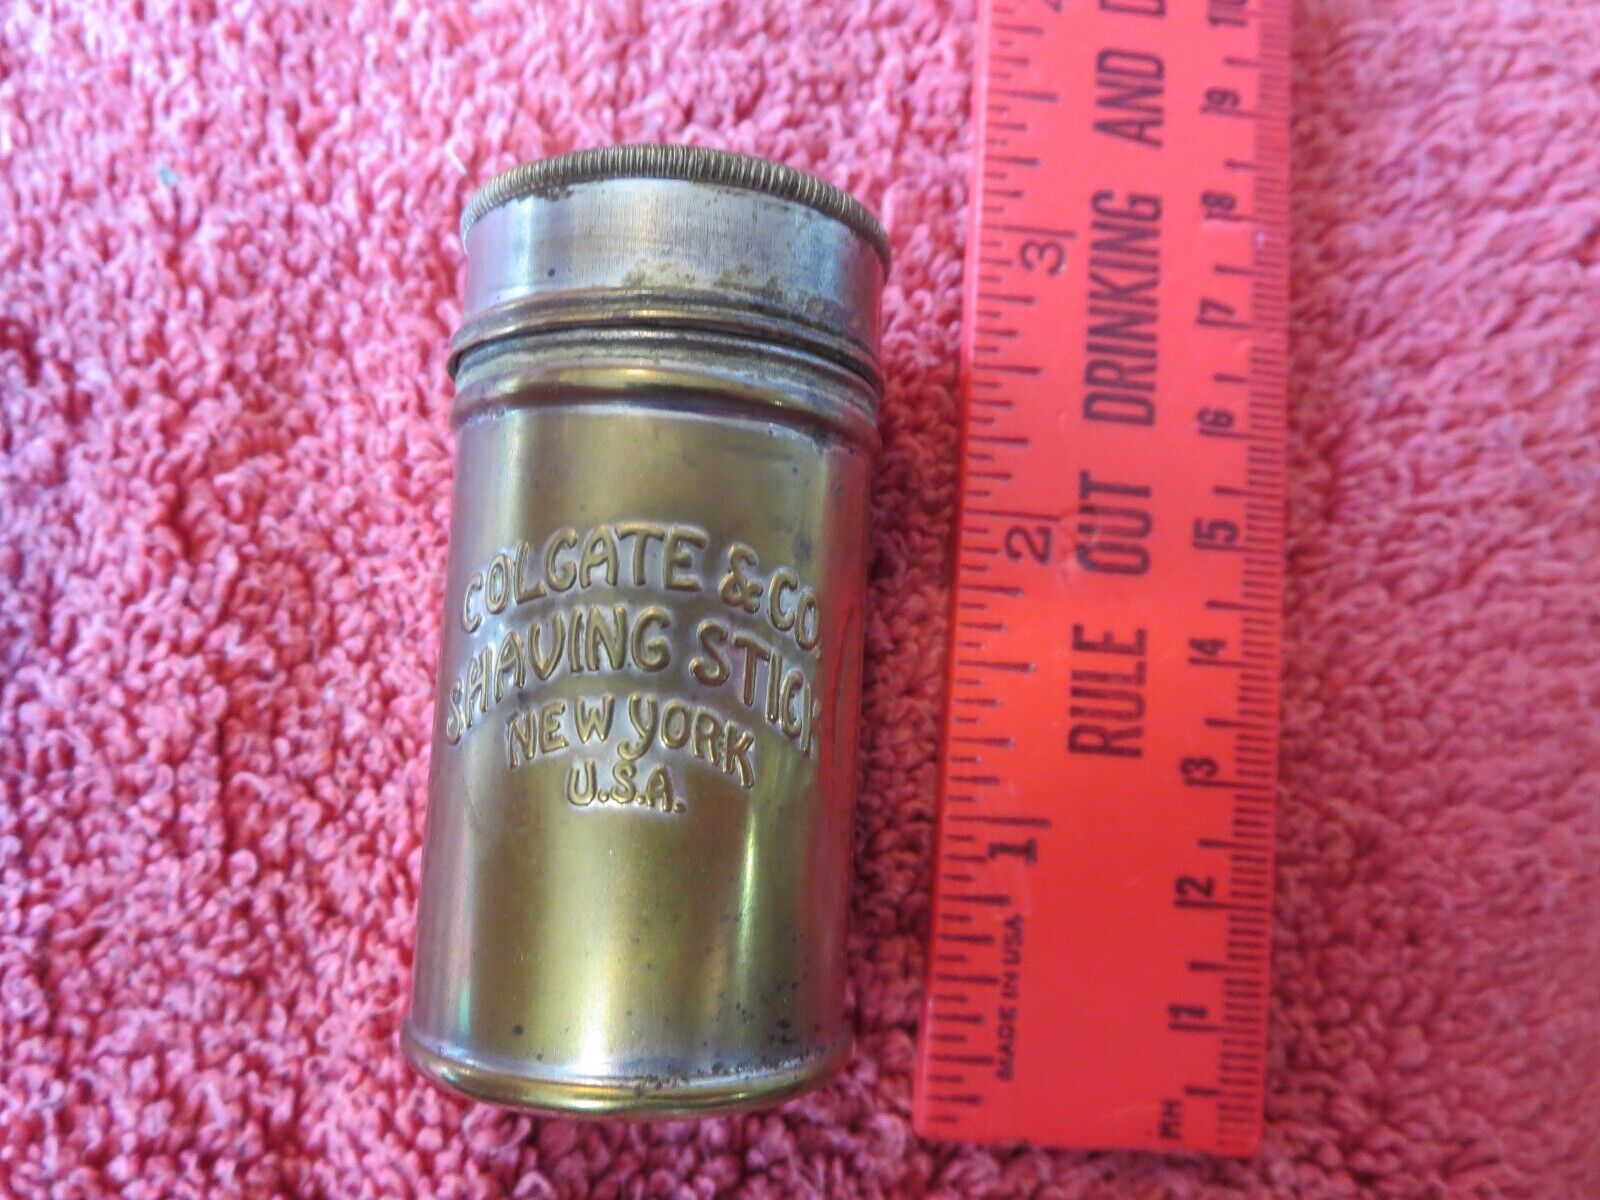 Antique Colgate & Co. Shaving Stick Tin New York USA Brass container tube